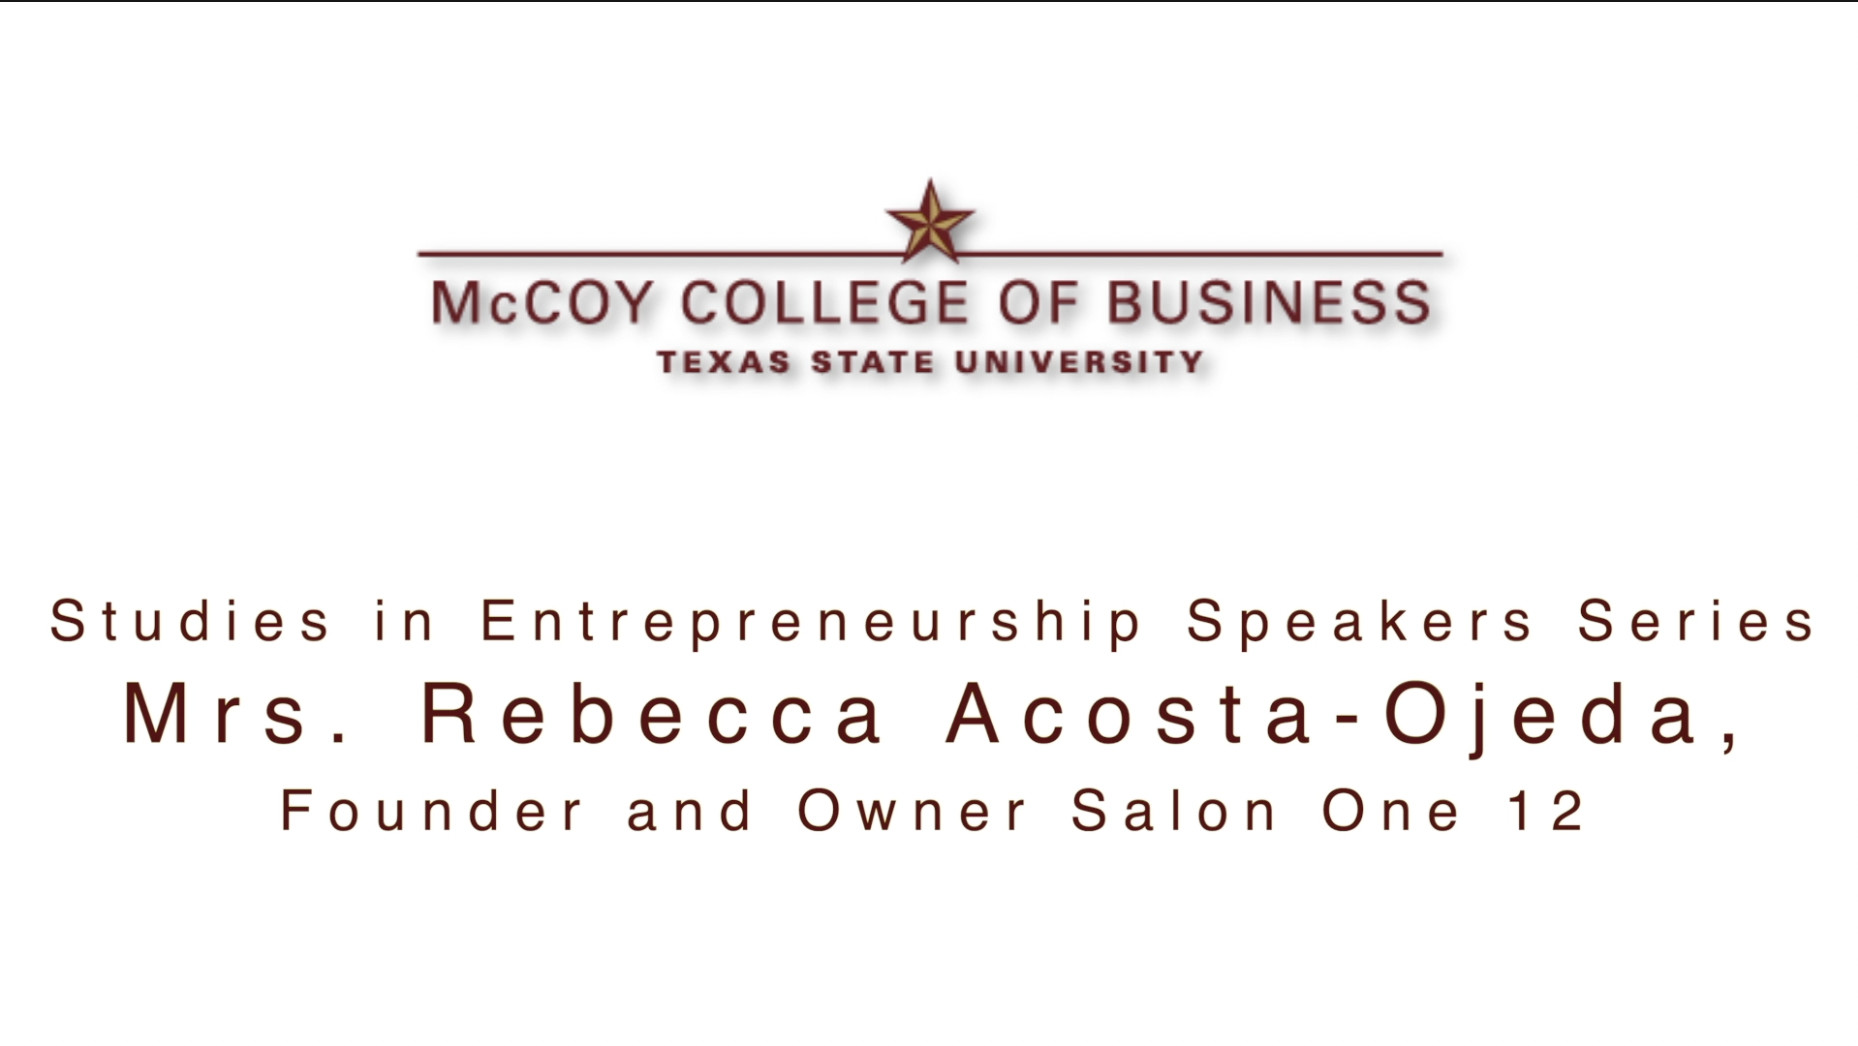 This Video is of Mrs. Rebecca Acosta-Ojeda's presentation to the Studies in Entreprenurship Speaker Series